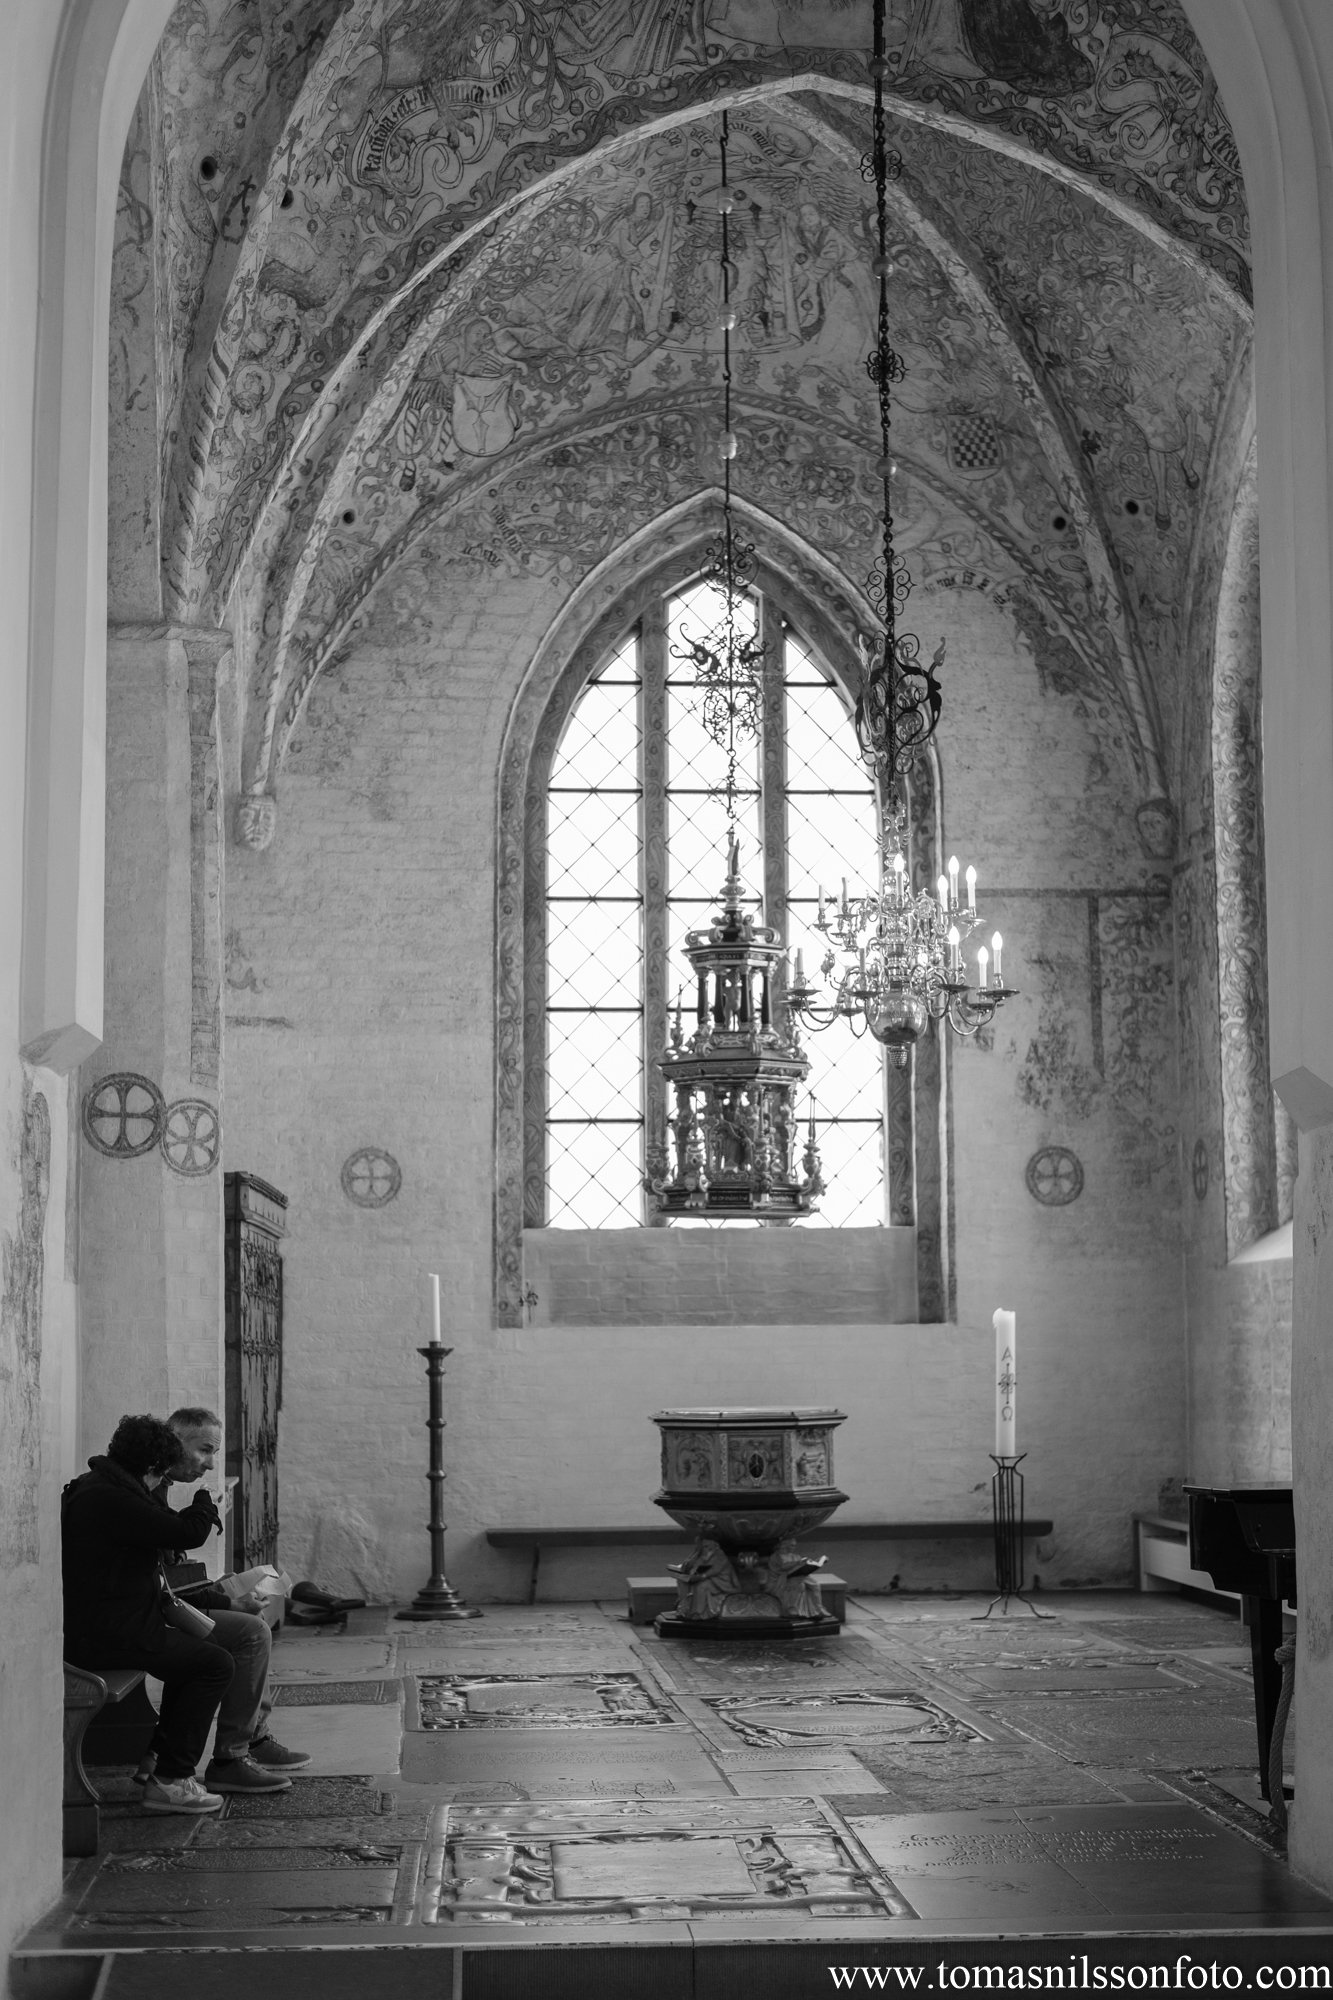 A sitdown in the Merchant's Chapel (Malmö, Sweden 2023)